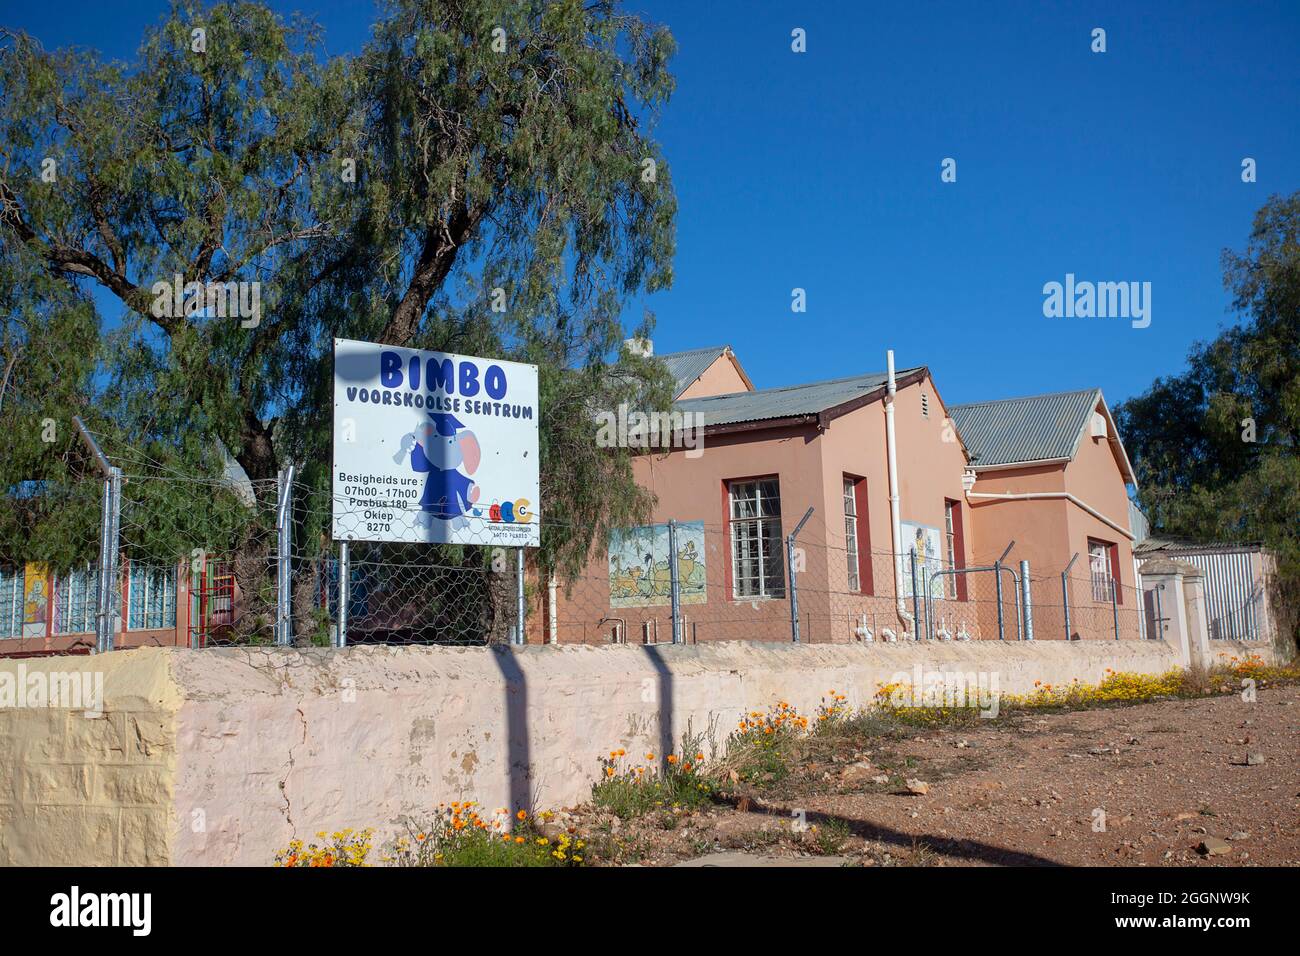 Bimbo Voorskoolse Sentrum pre primary school Okiep, Northern Cape Stock Photo